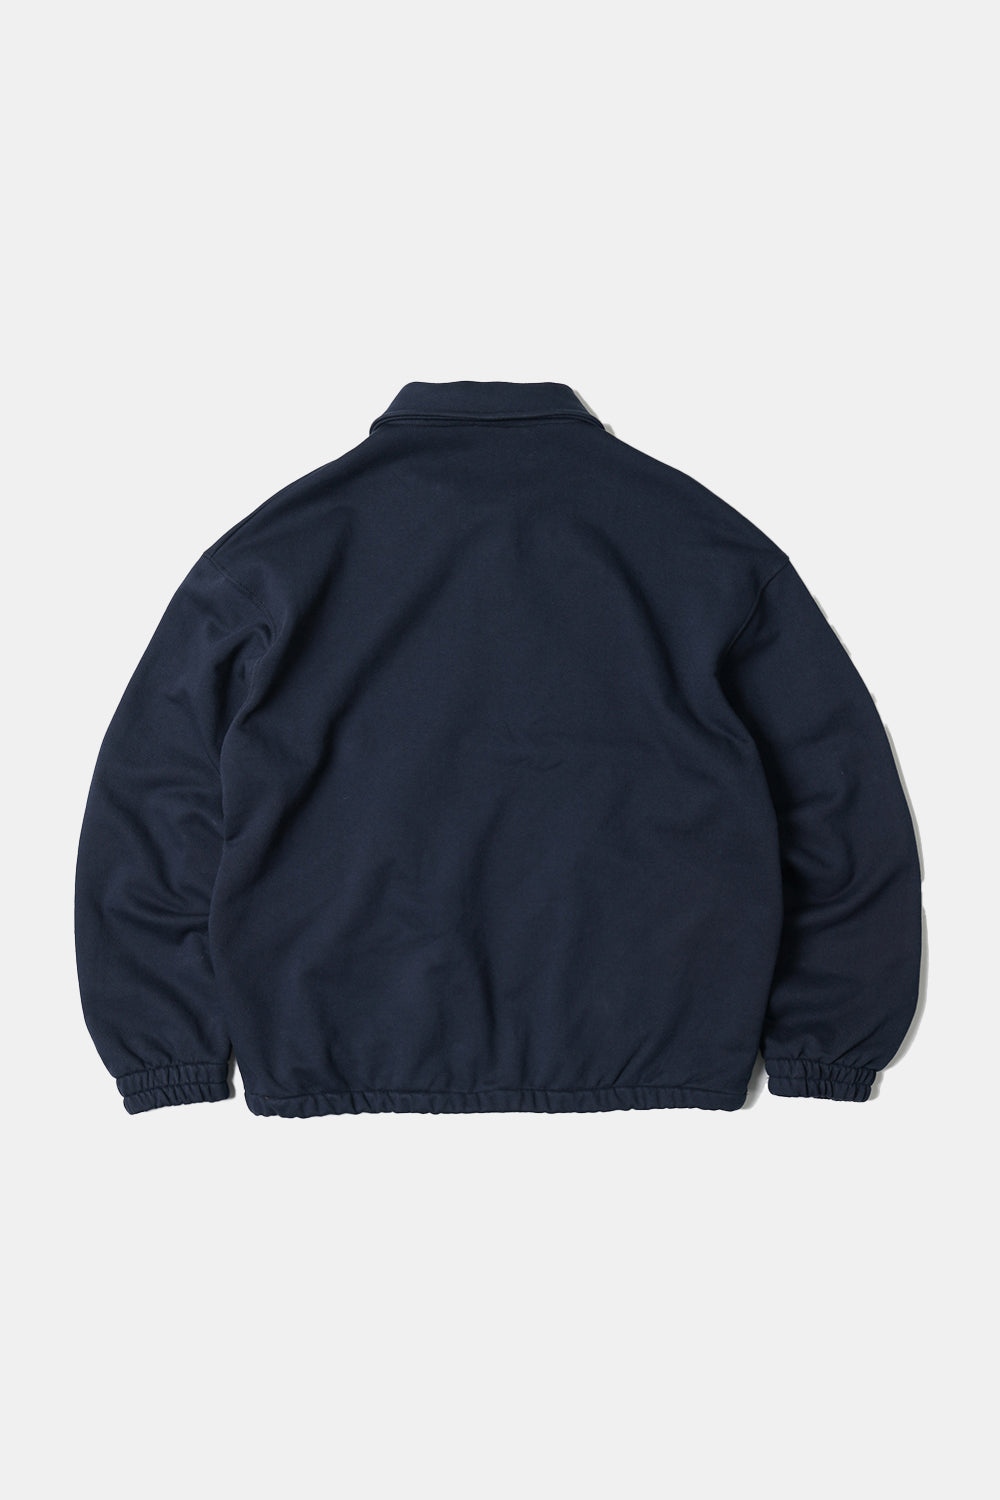 Frizmworks Banding Snap Sweatshirt (Navy)